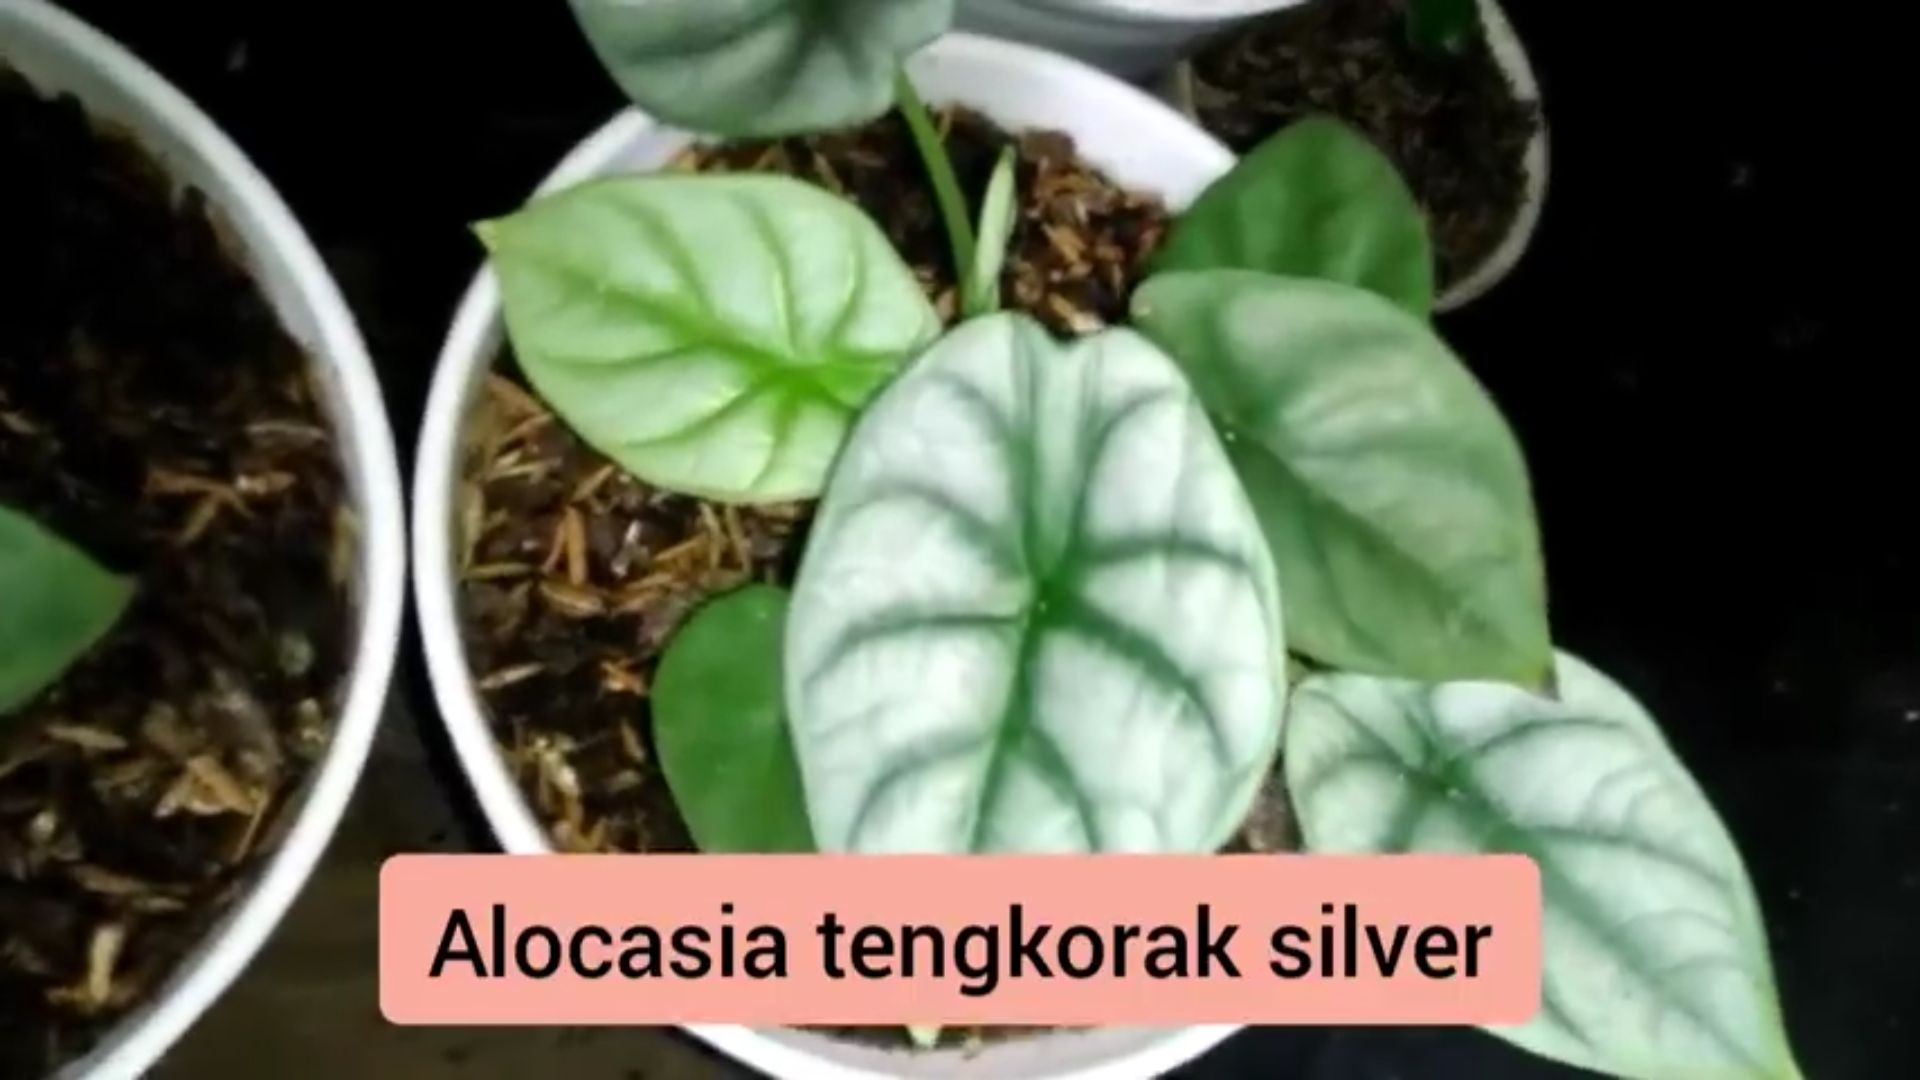 Alocasia tengkorak silver